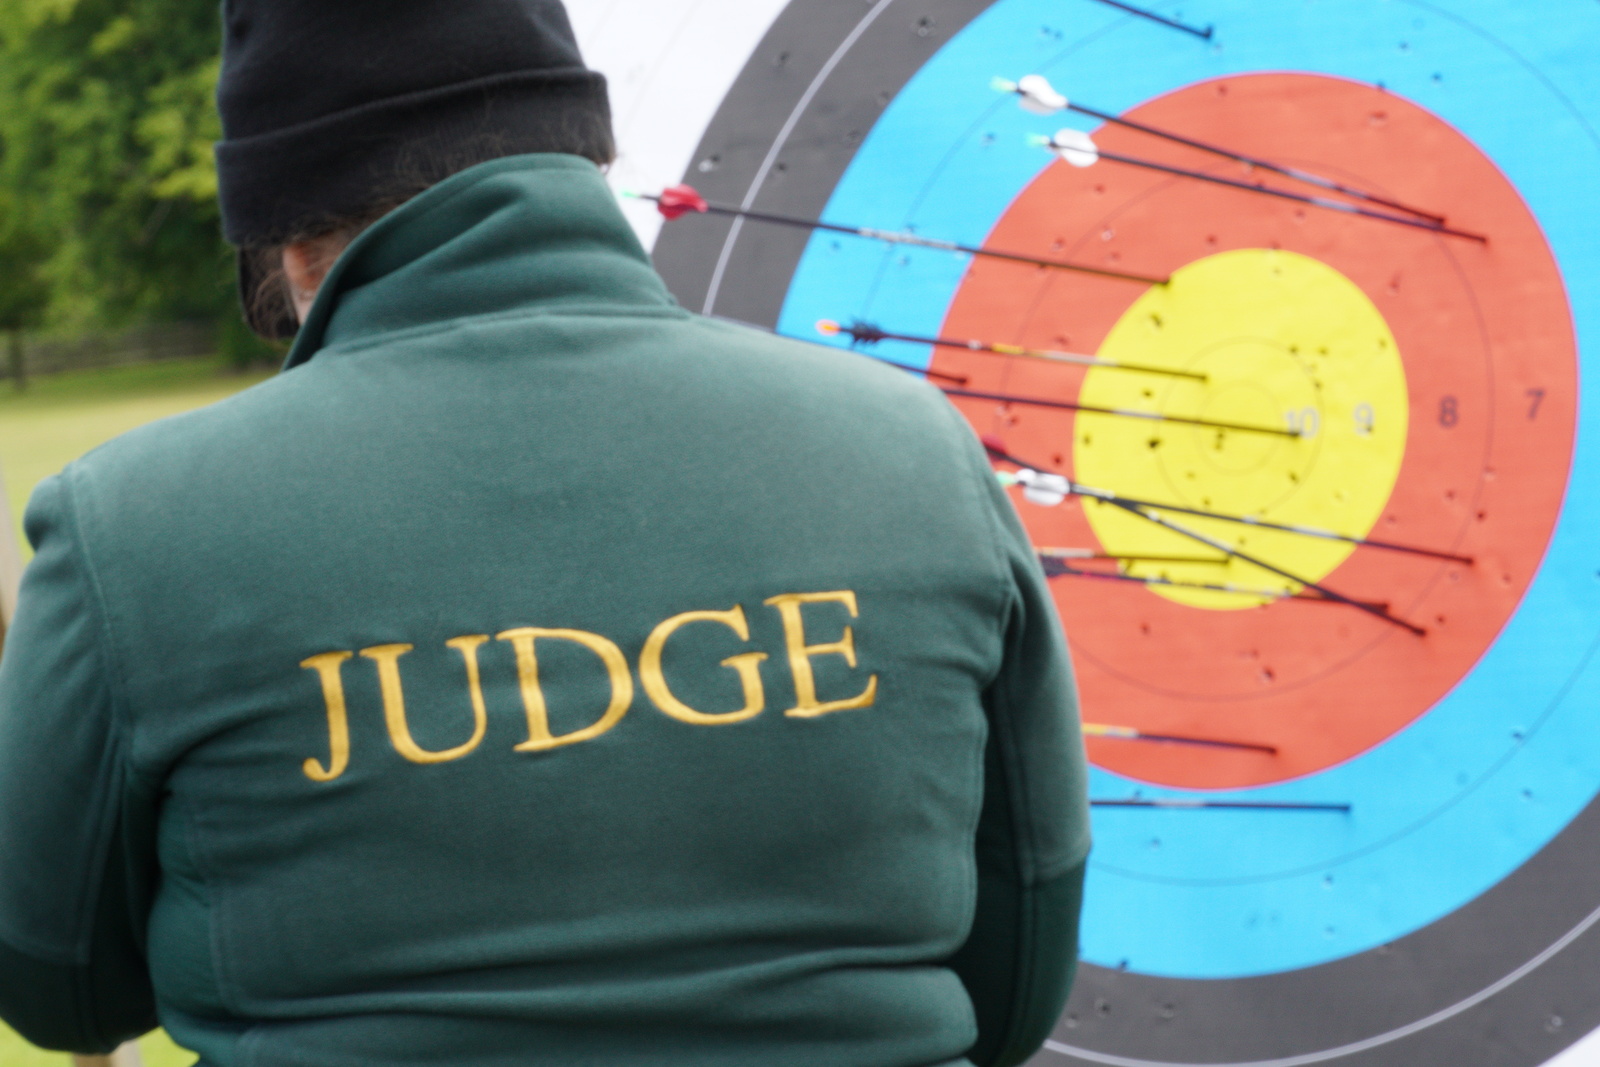 Judge looking at a target